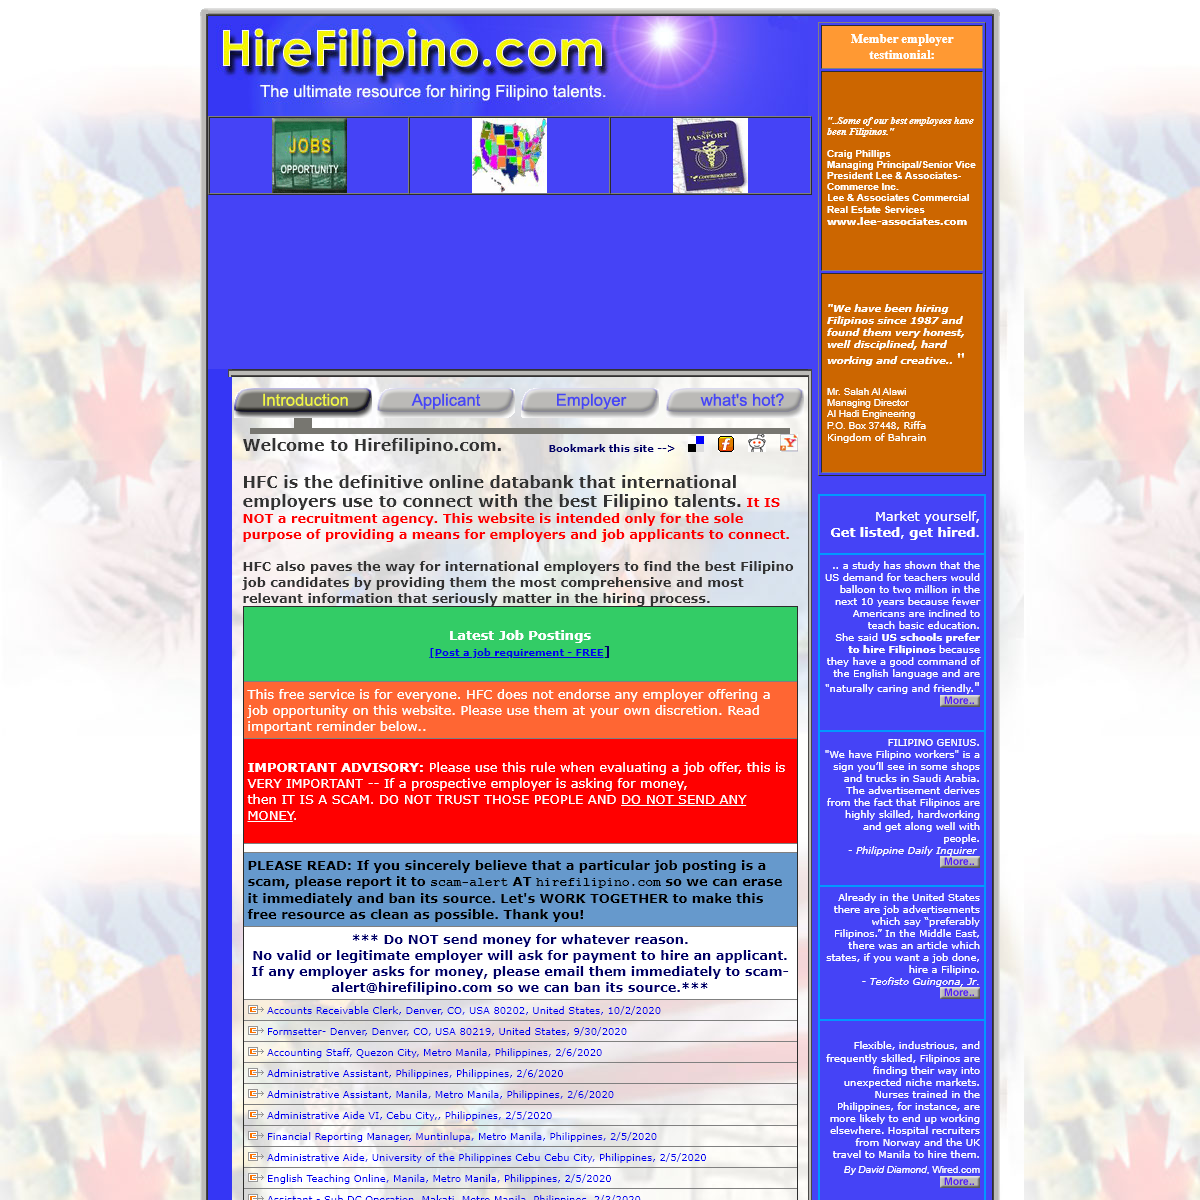 A complete backup of hirefilipino.com